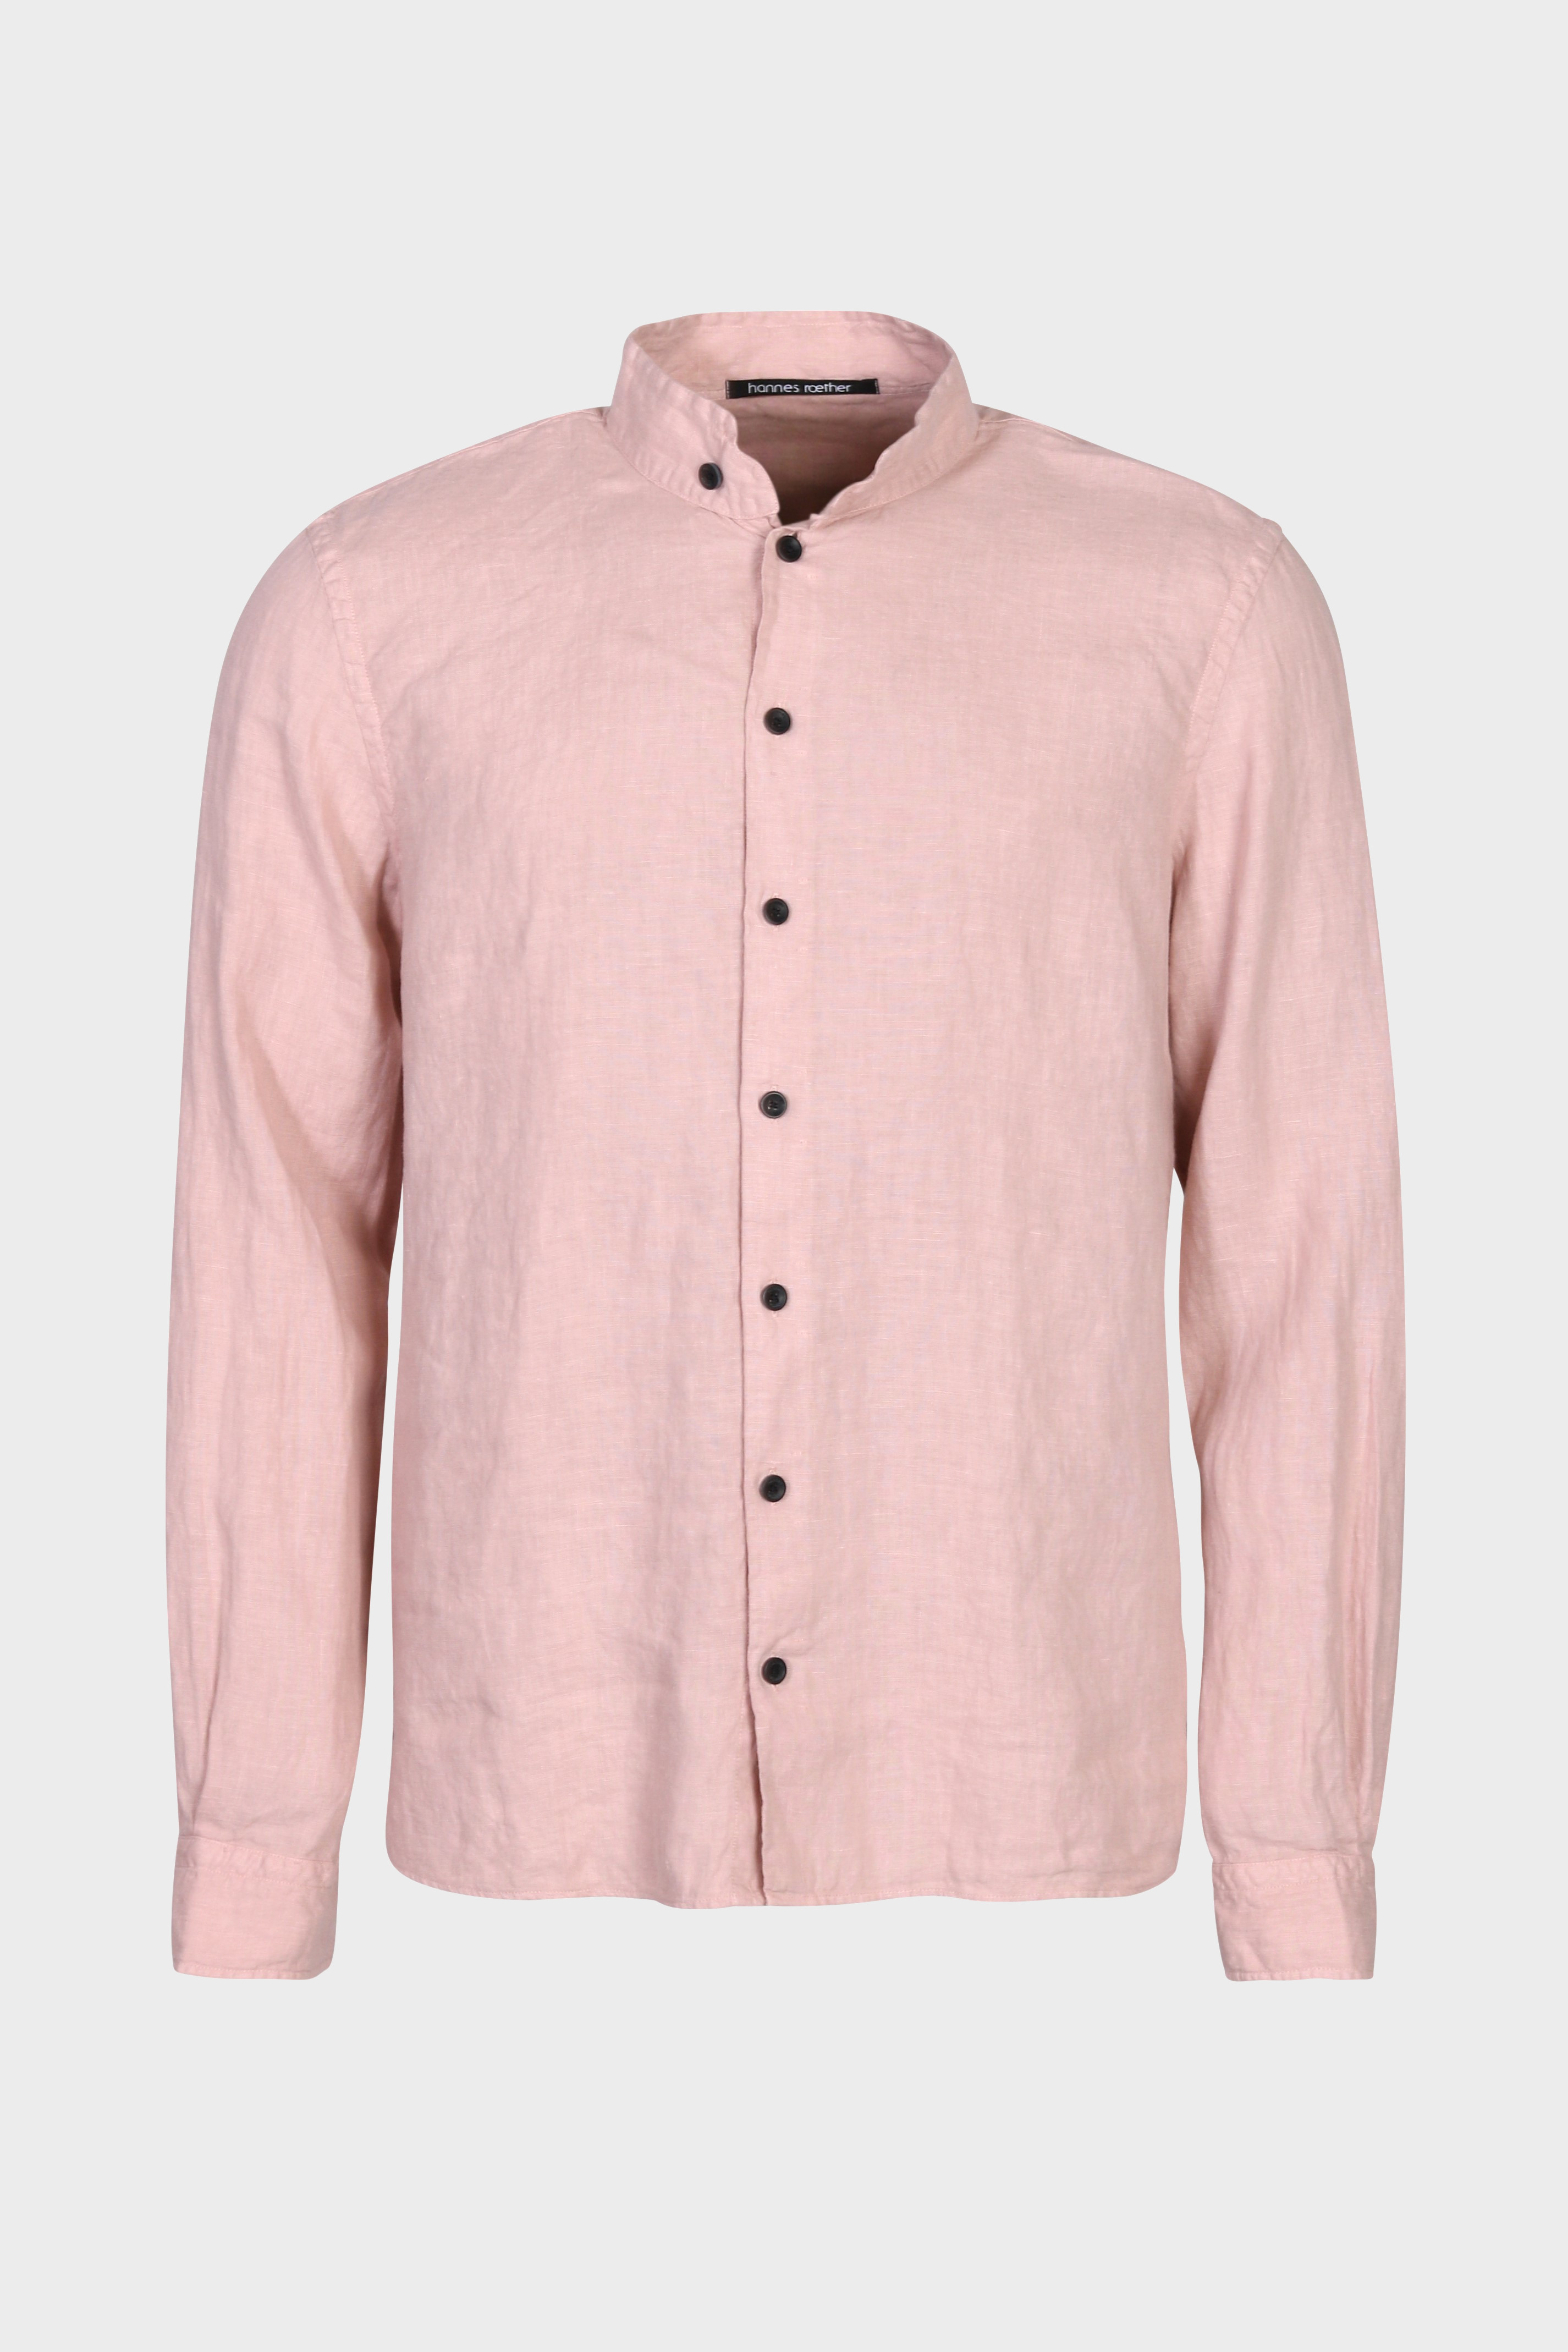 HANNES ROETHER Linen Shirt in Rosé 3XL